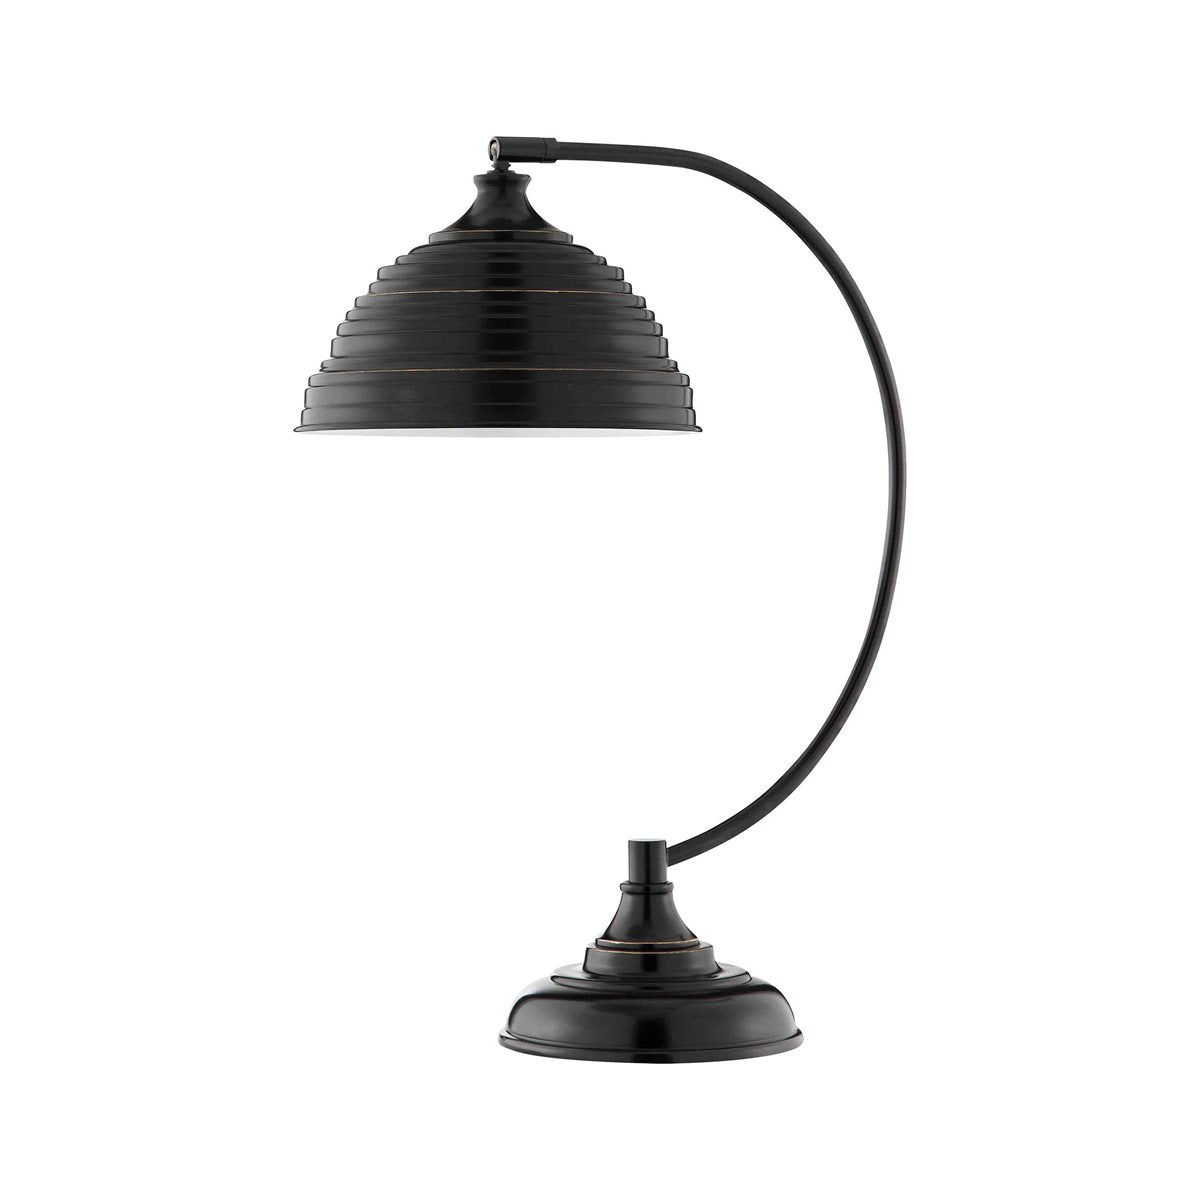 Stein World Alton Table Lamp 99615